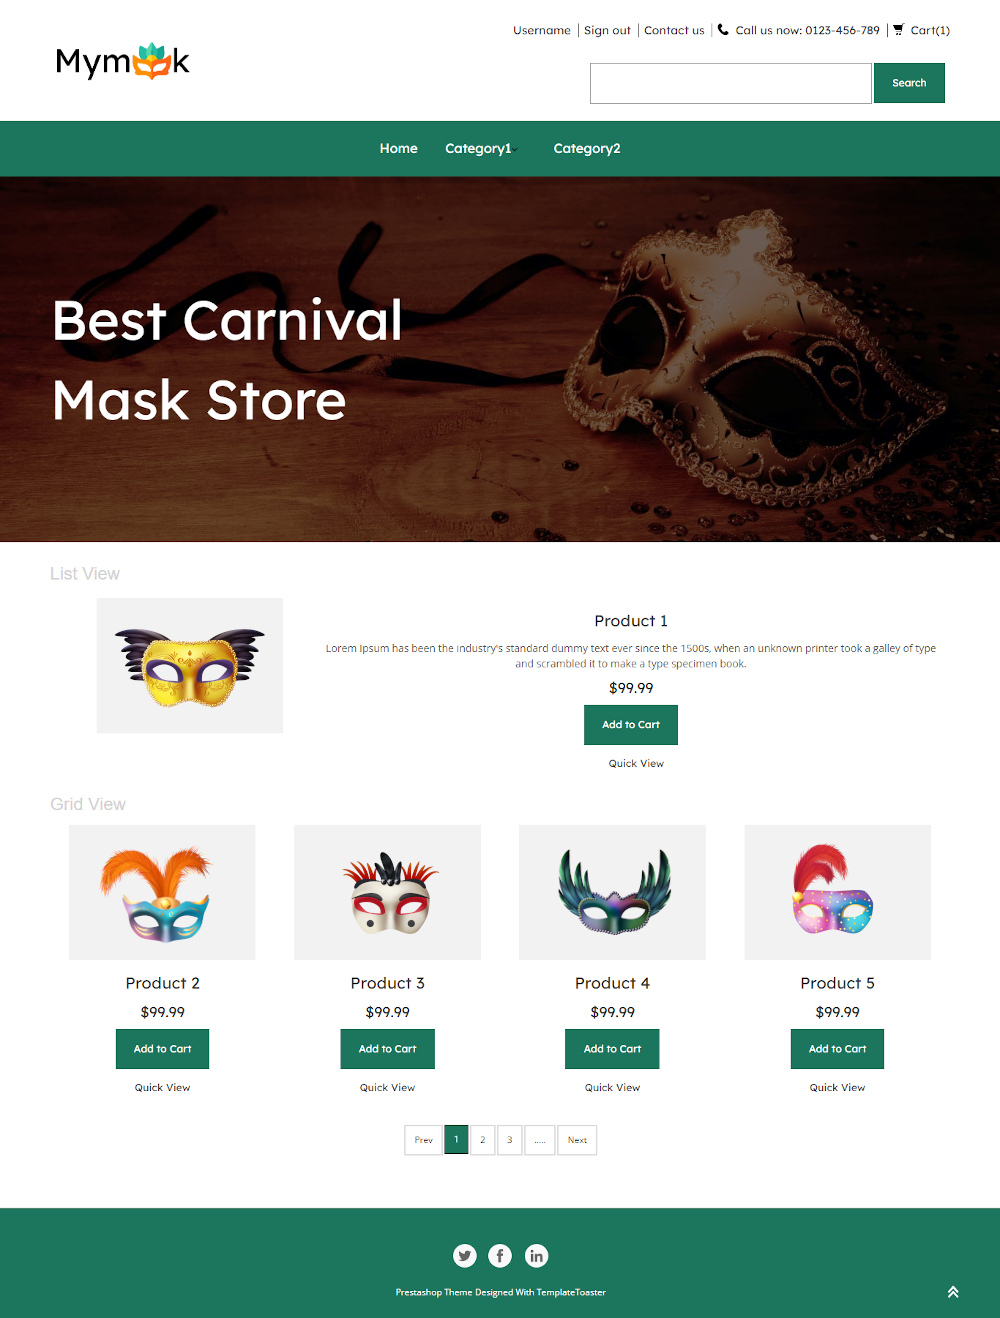 My Mask - Online Carnival Mask Store Prestashop Theme